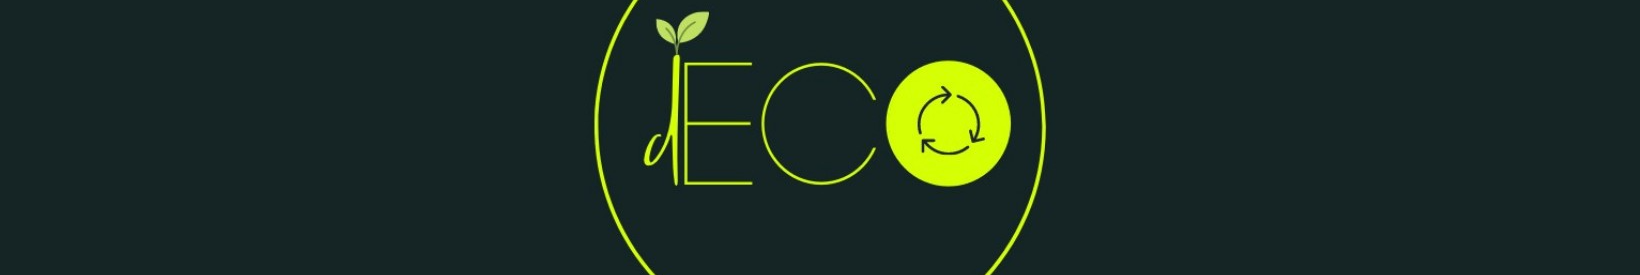 ECO Company background